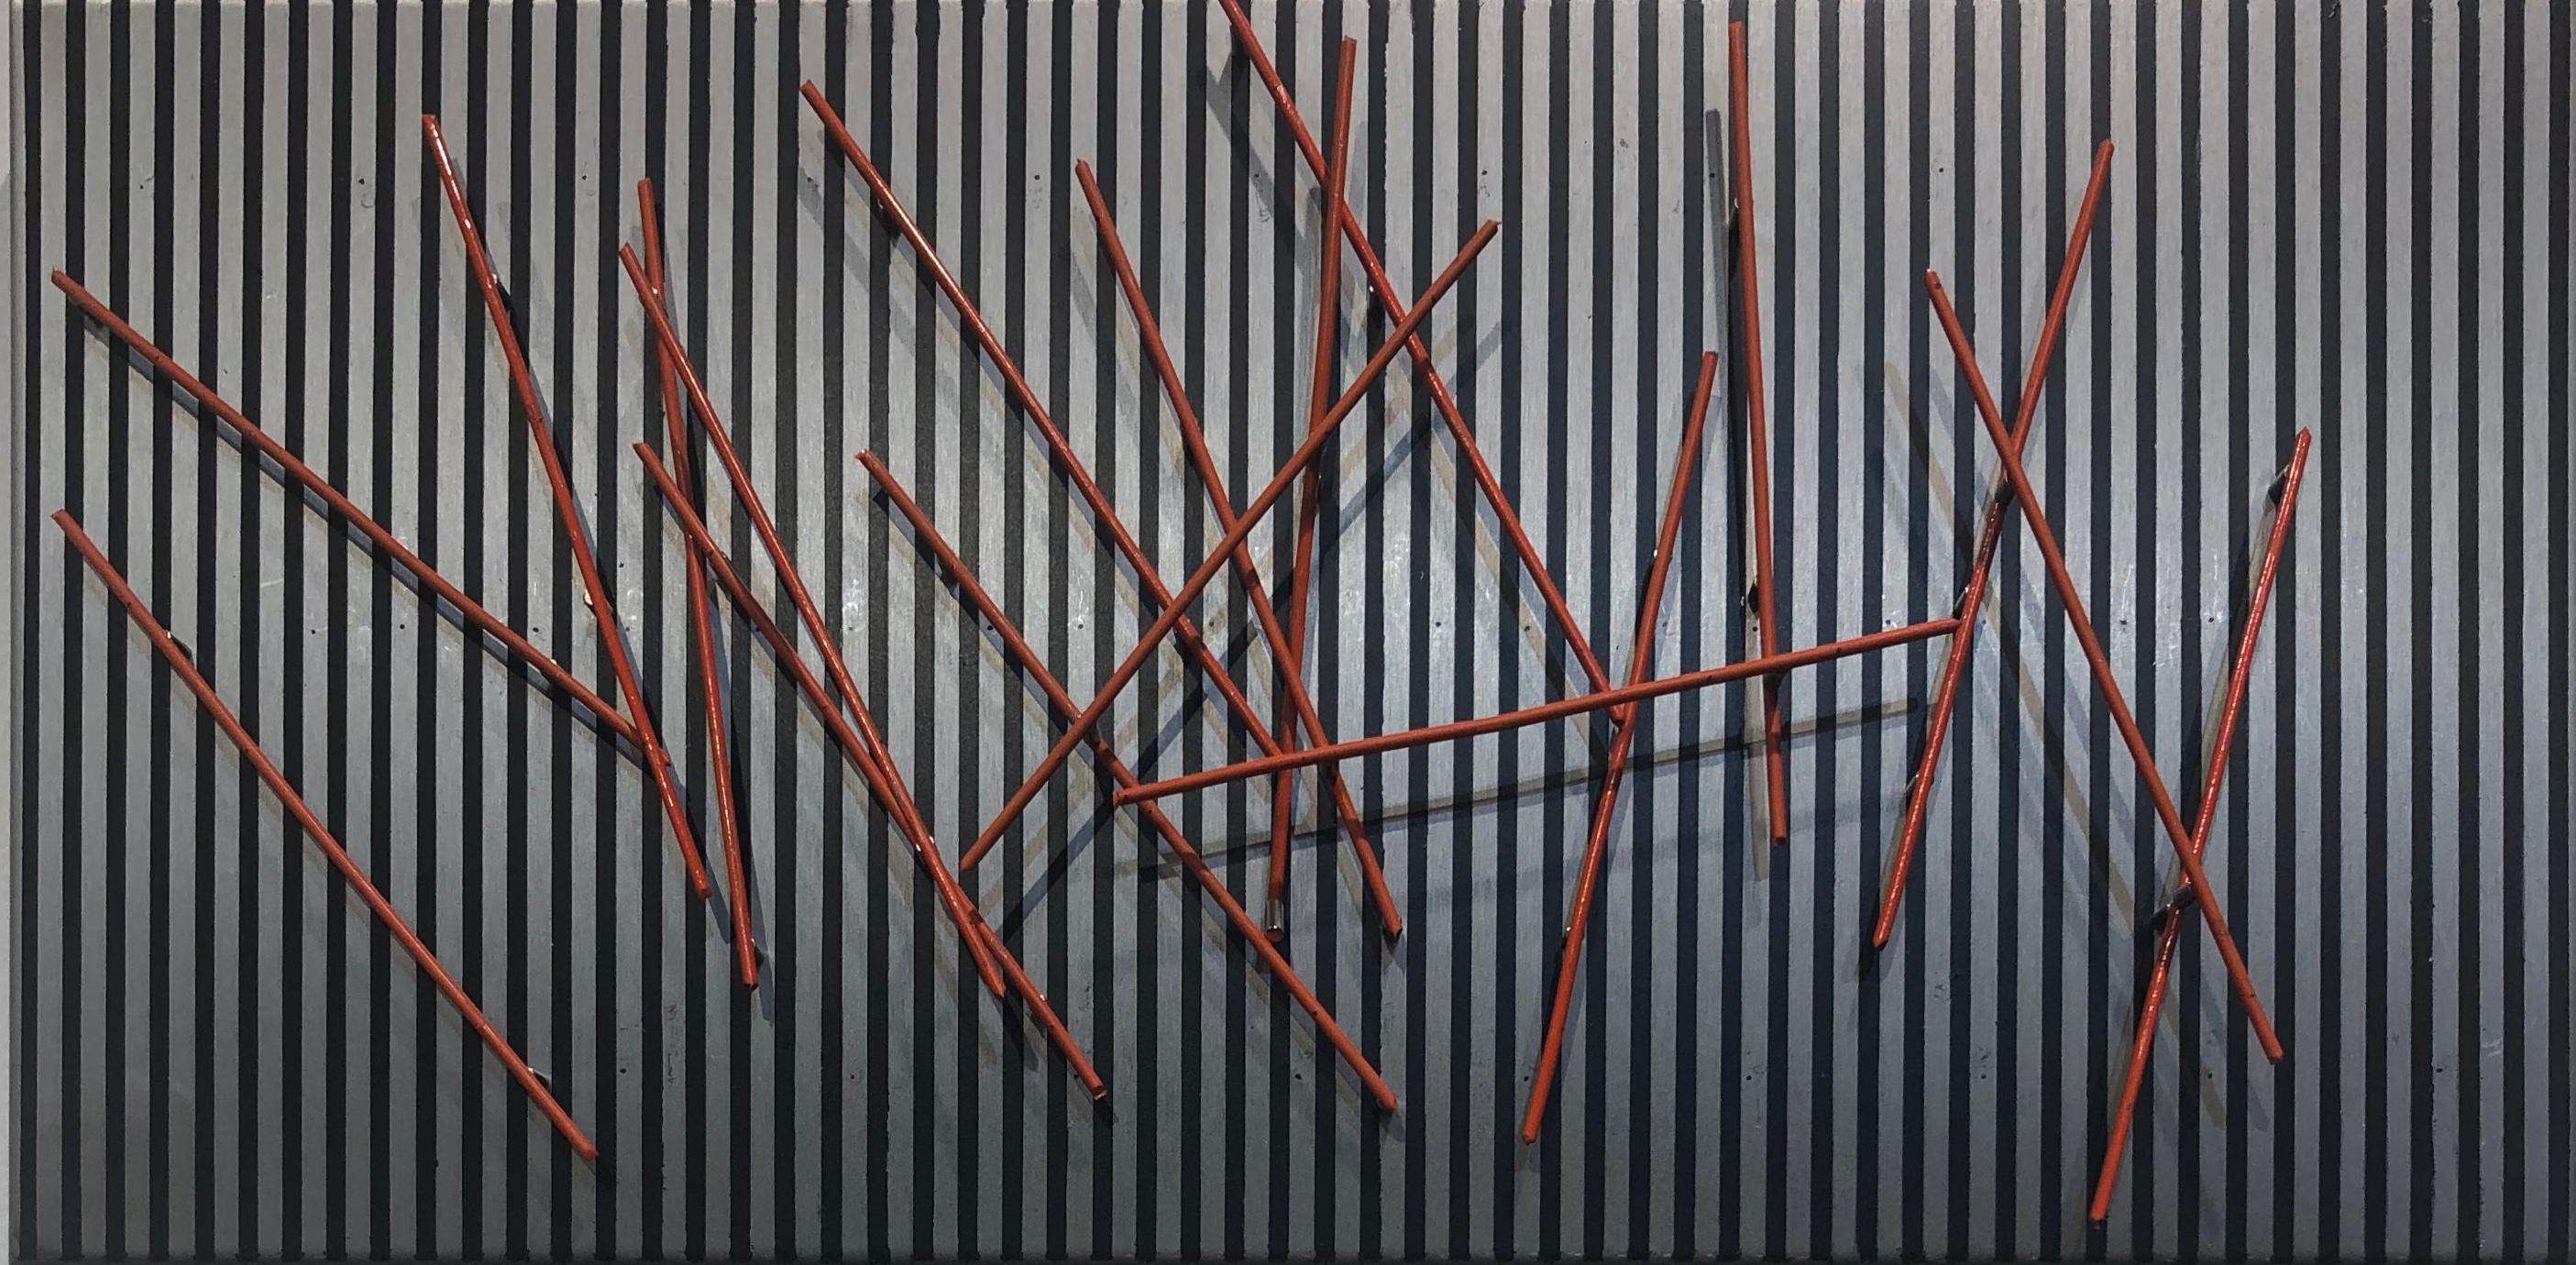 Daniel Samper Abstract Painting - Orange Rods